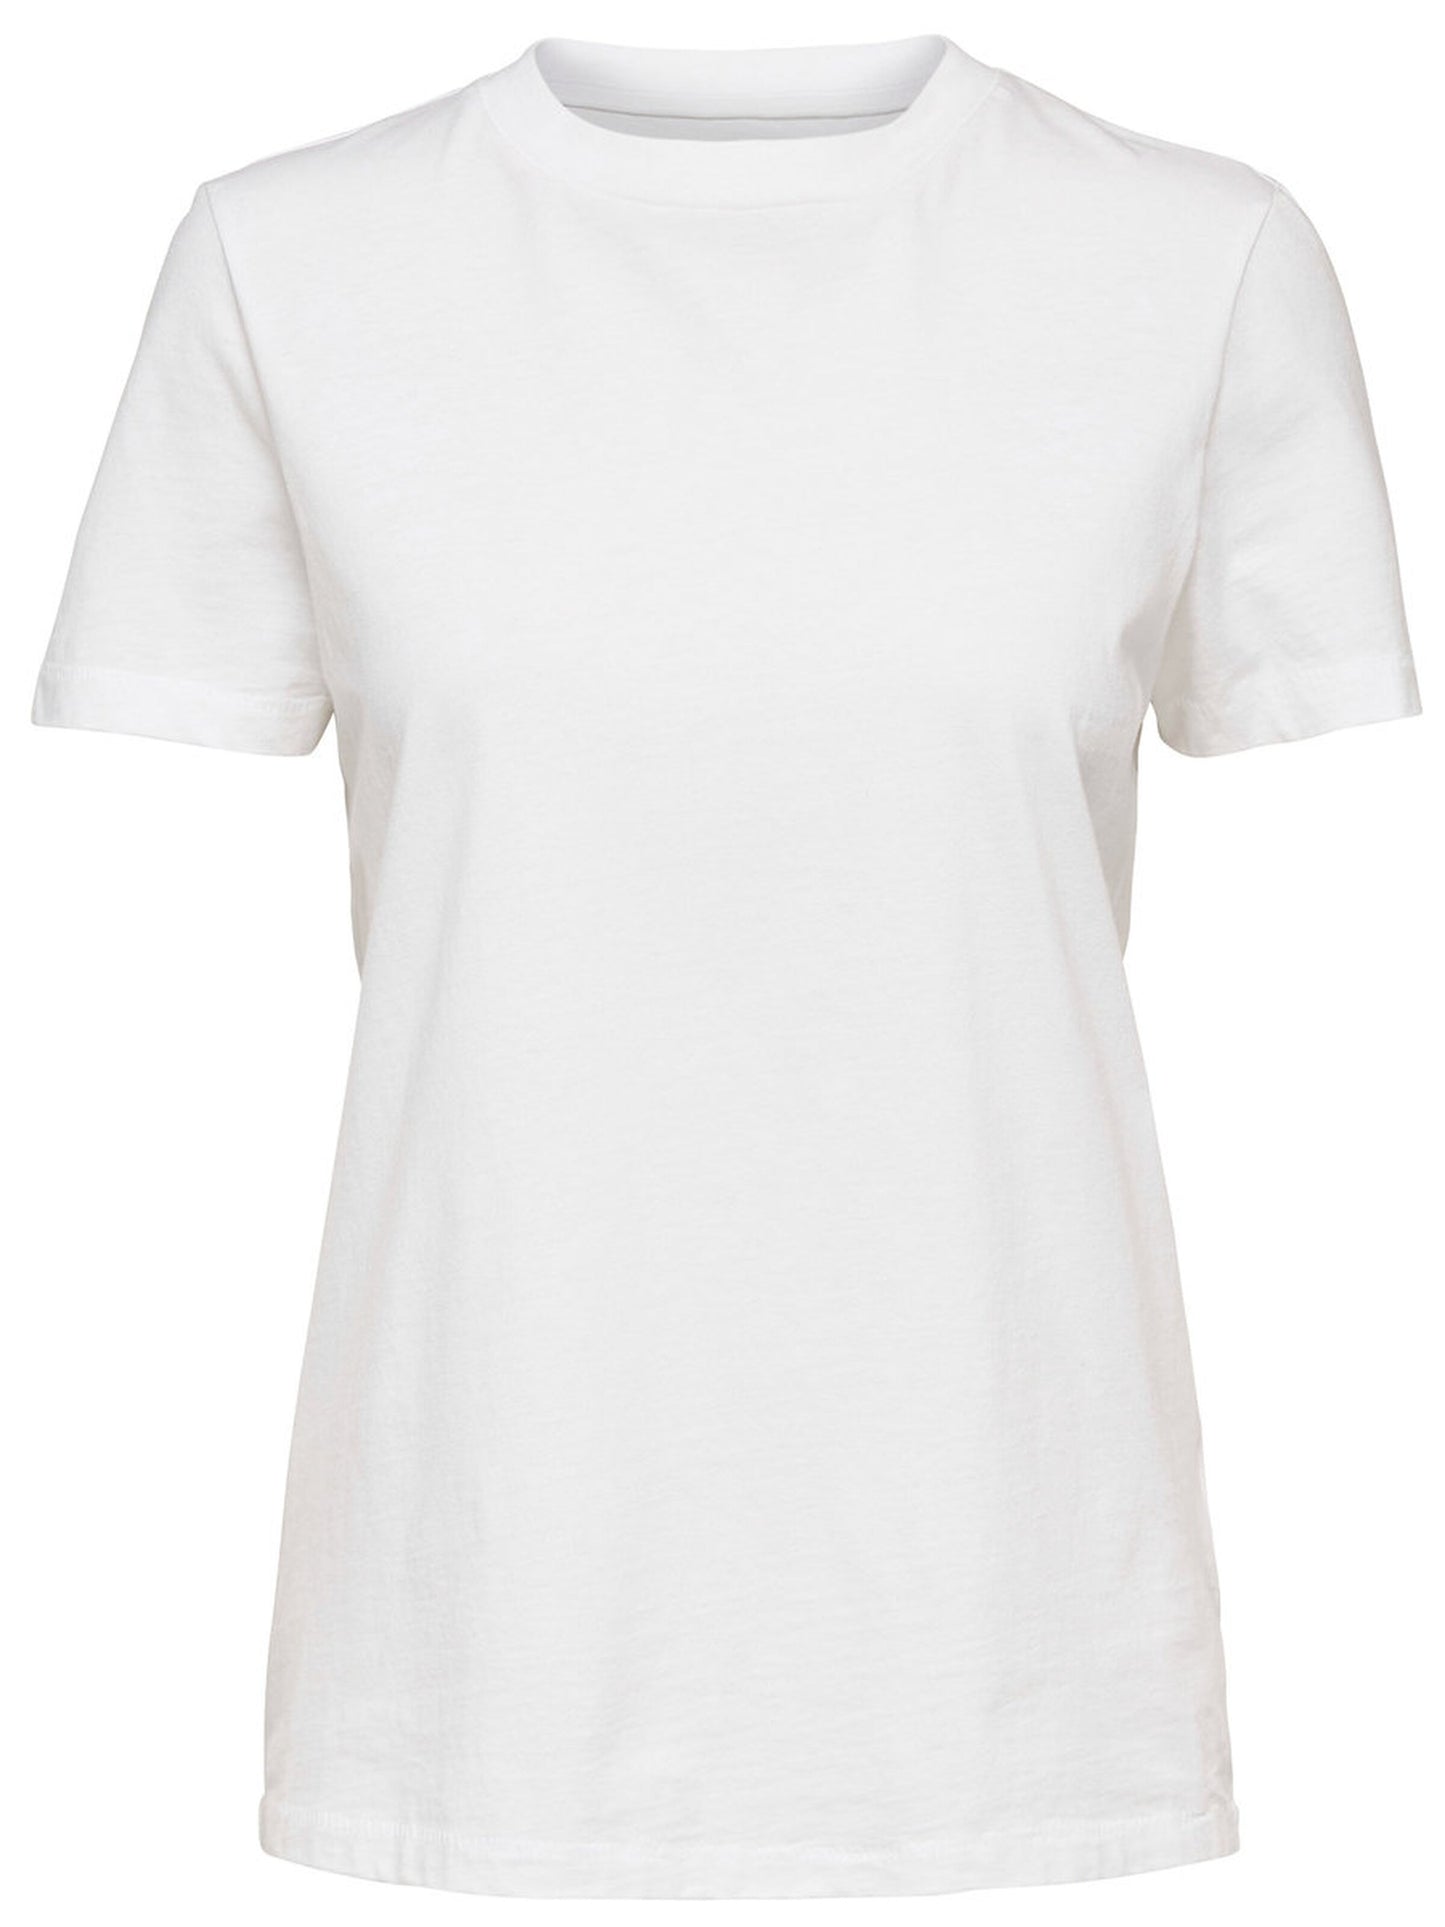 pima cotton t-shirt